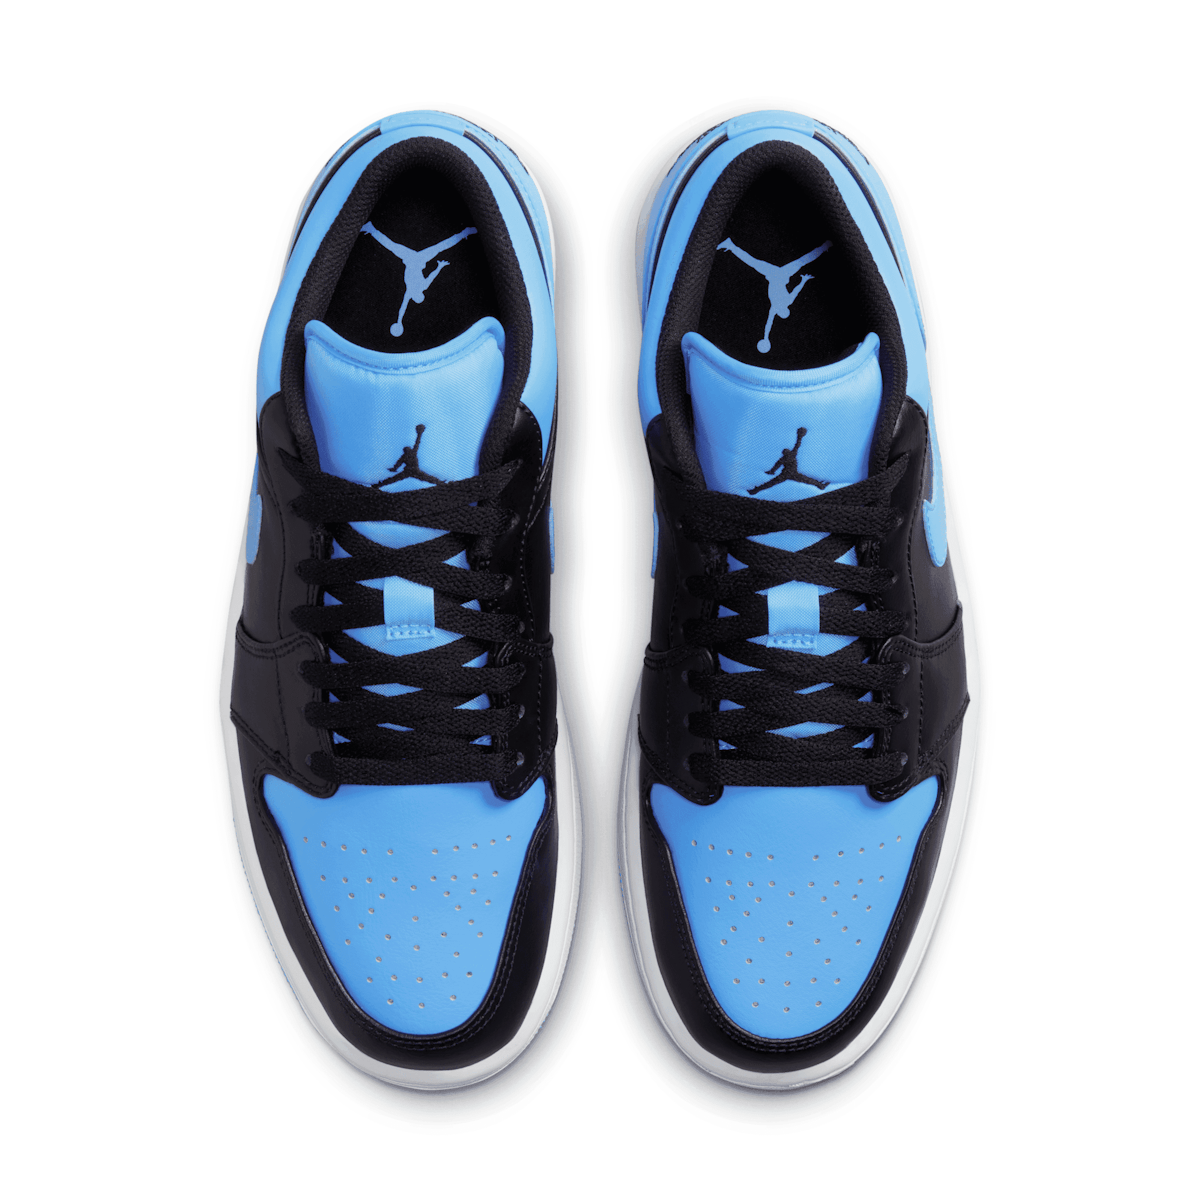 Air Jordan 1 Low Black University Blue Angle 2